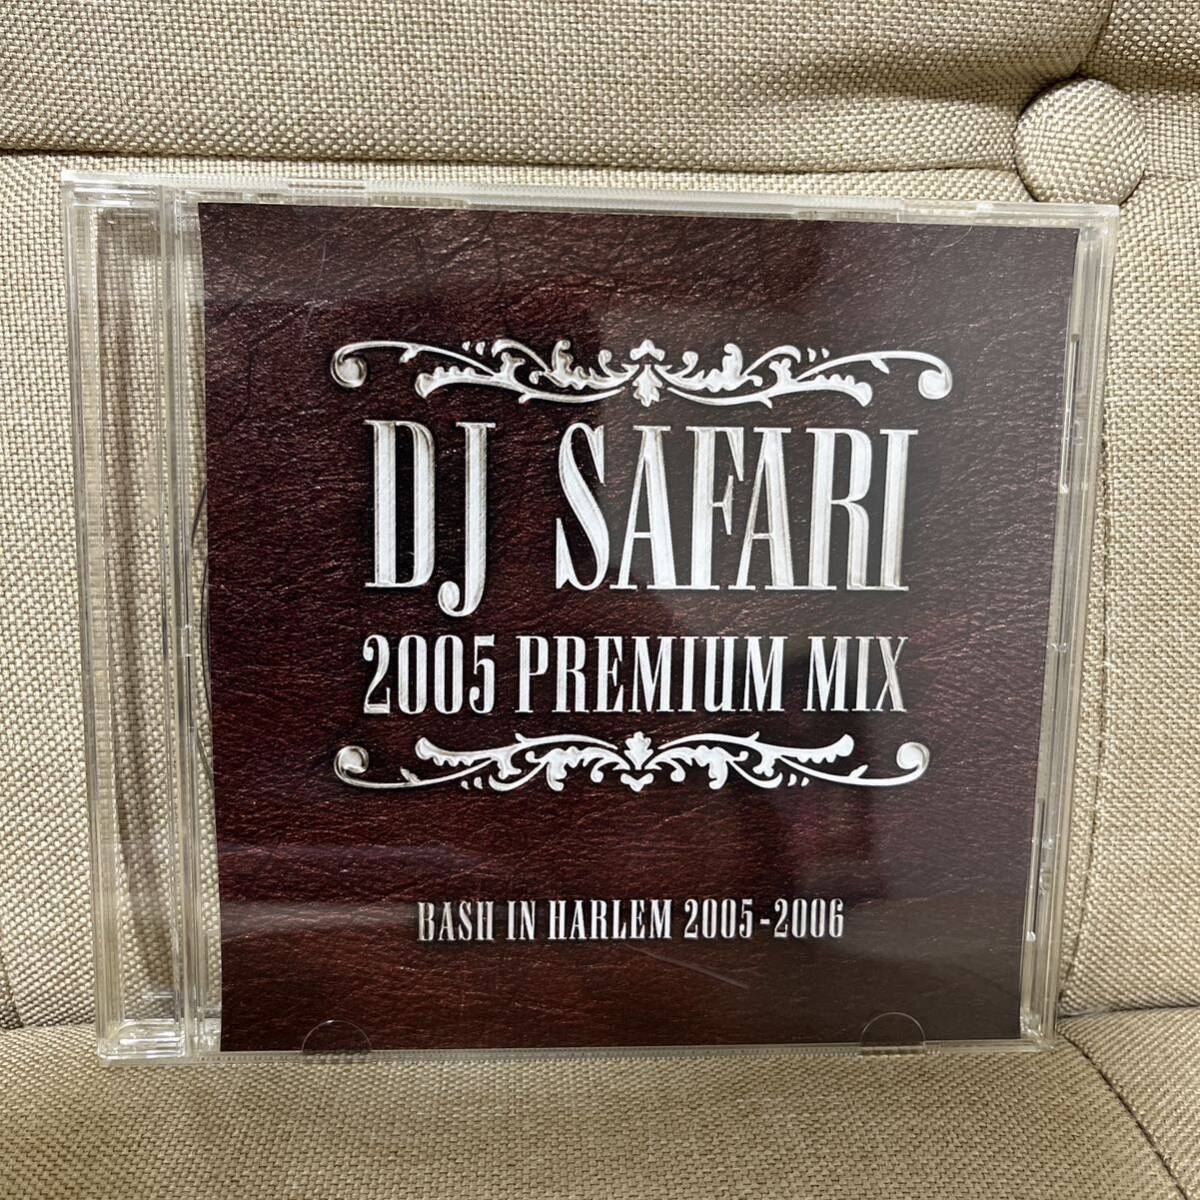 【DJ SAFARI】2005 PREMIUM MIX (BASH IN HARLEM 2005 - 2006)【MIX CD】【HIPHOP / R&B】【廃盤】【送料無料】_画像1